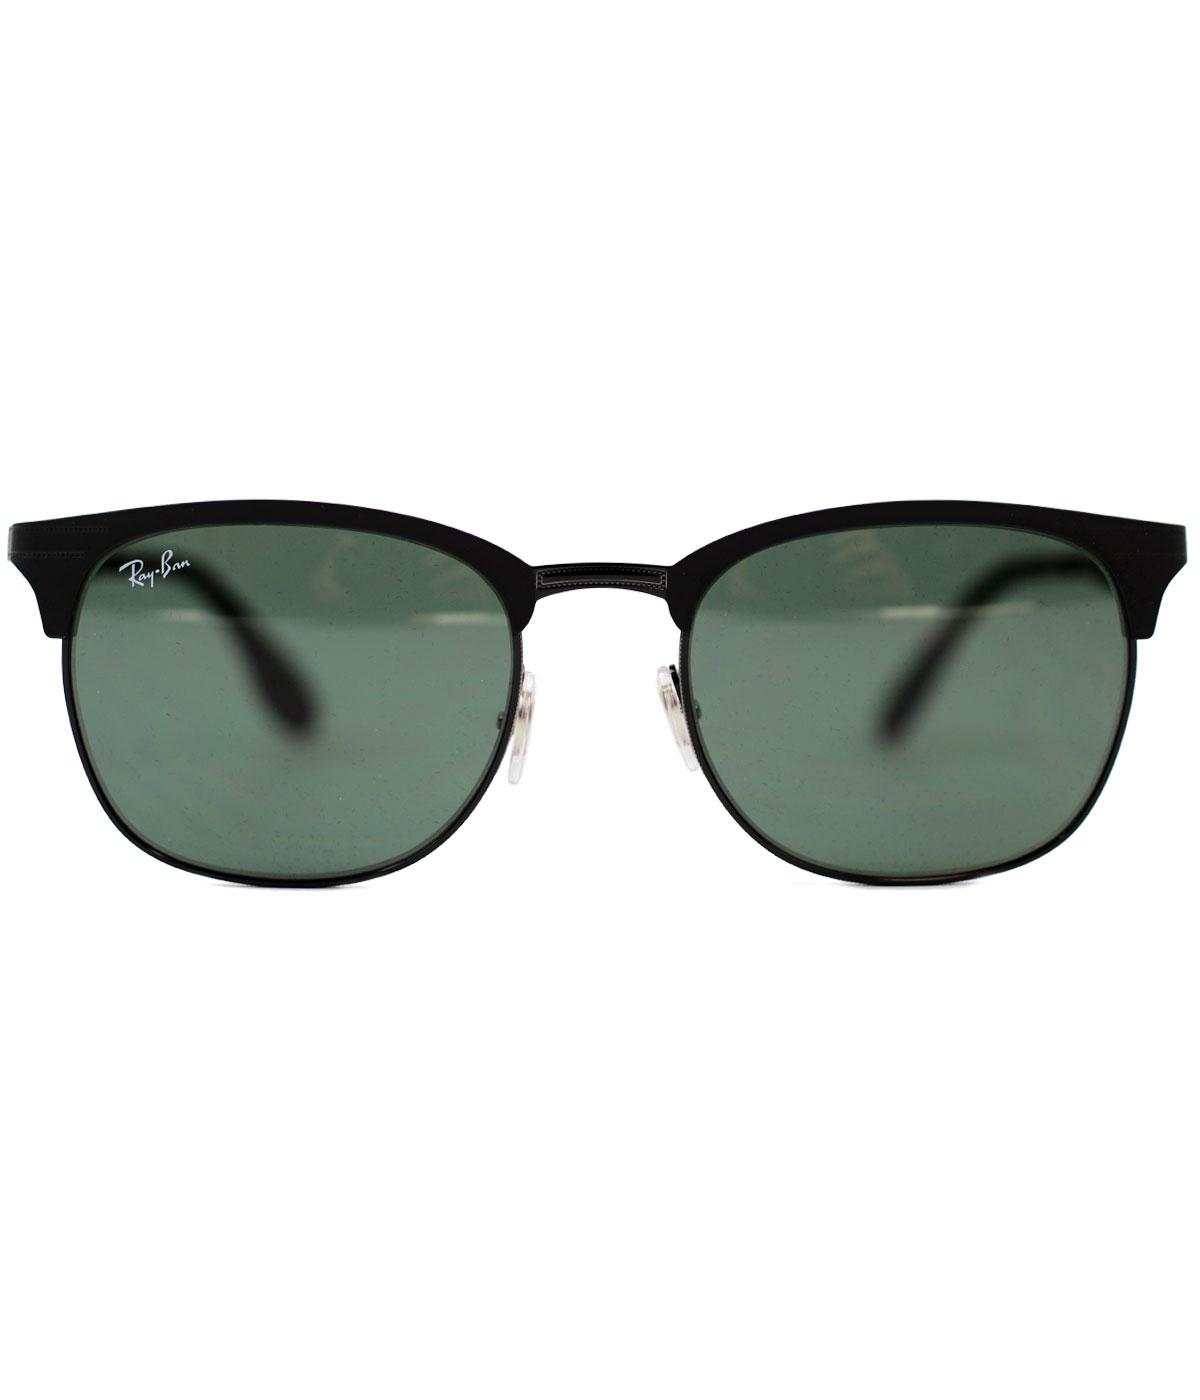 Ray-Ban Clubmaster Retro 50s Mod Thin Frame Sunglasses Black